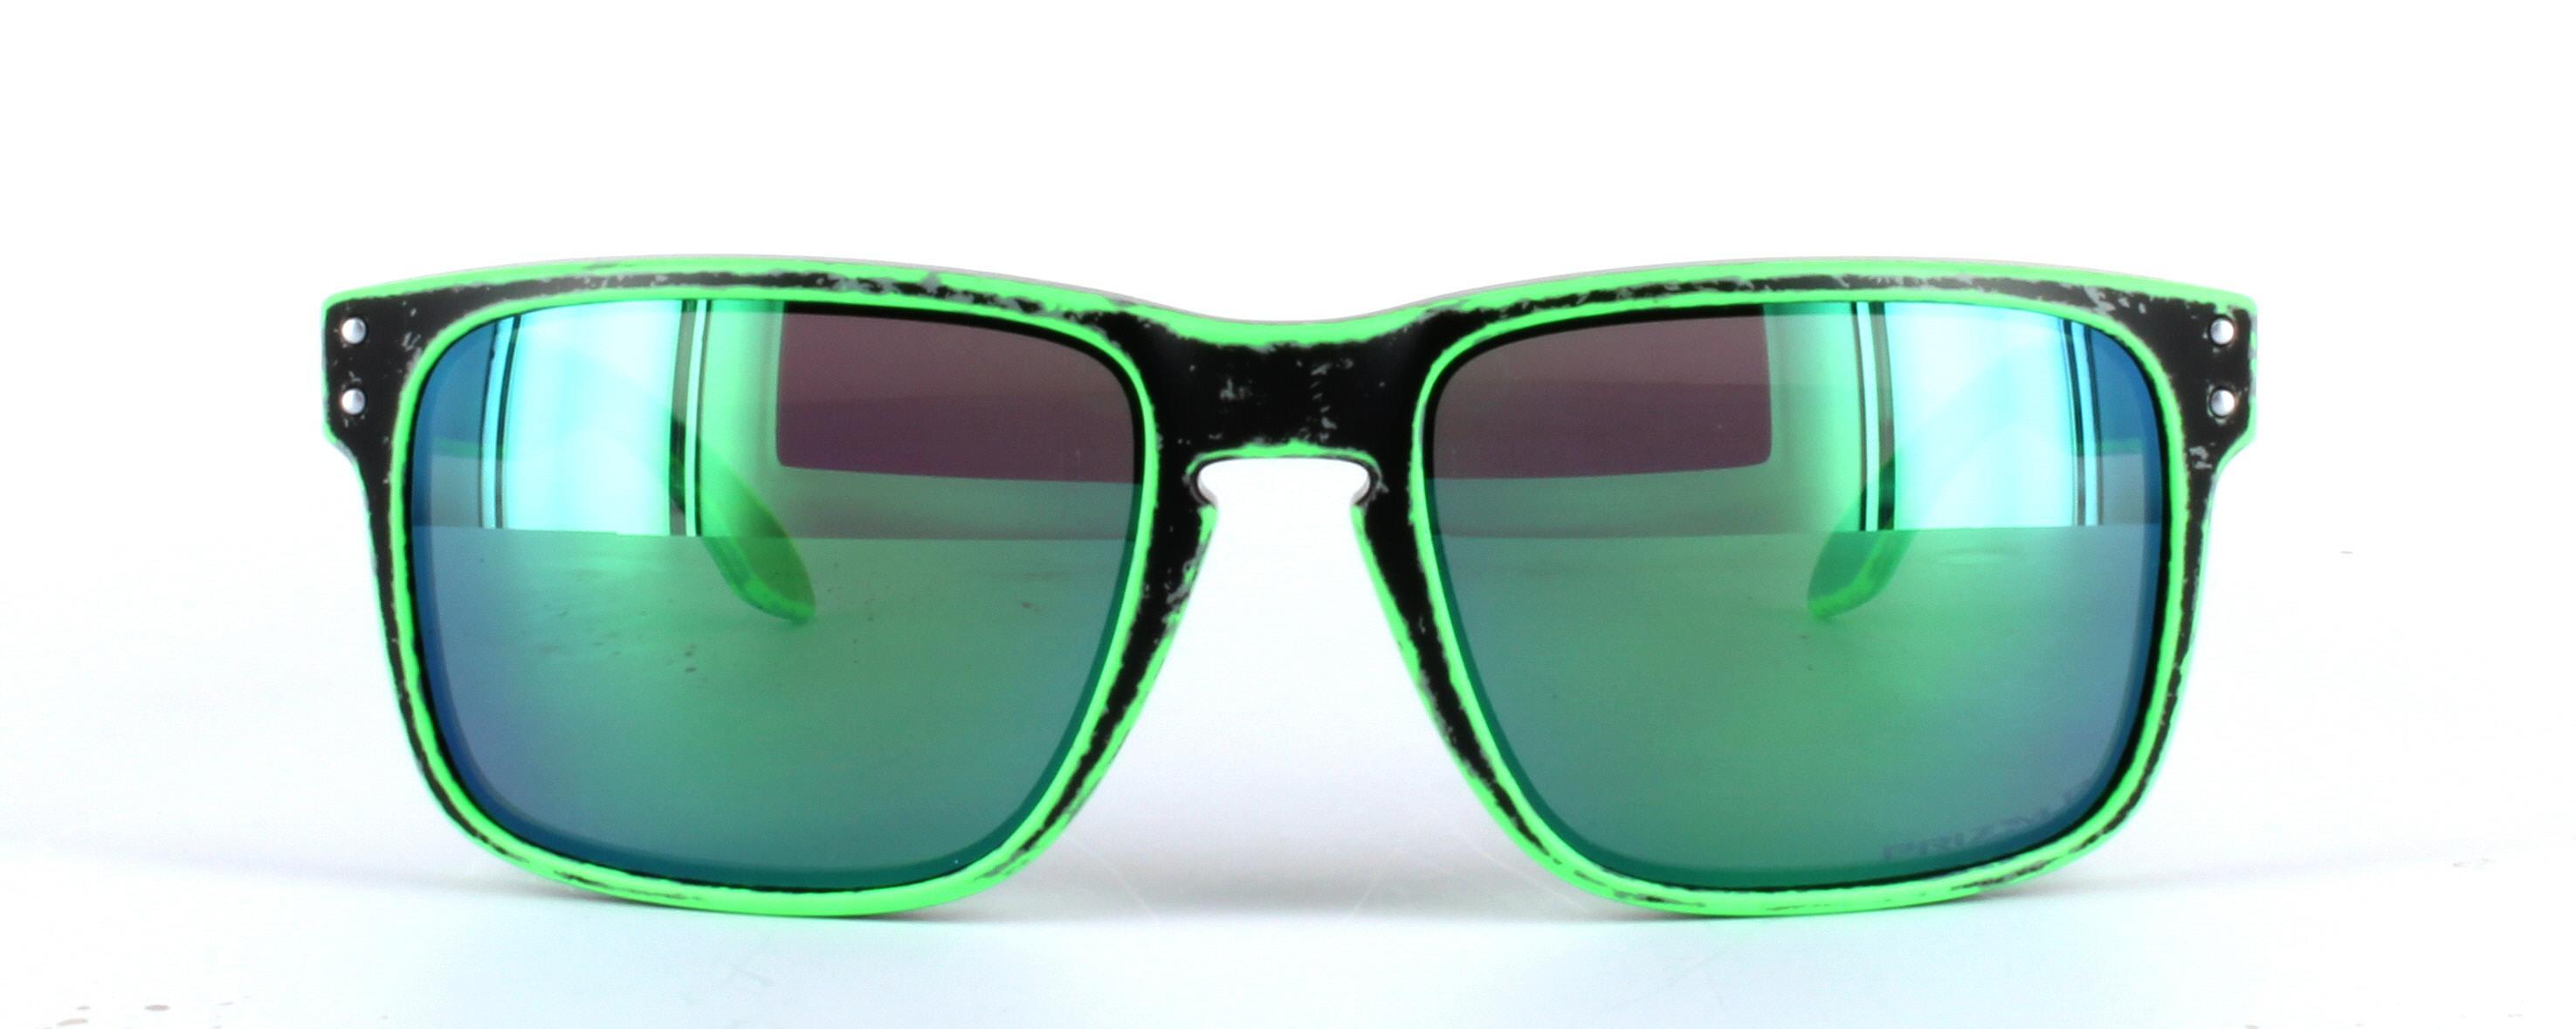 Oakley (9102) Black Full Rim Plastic Sunglasses - Image View 5